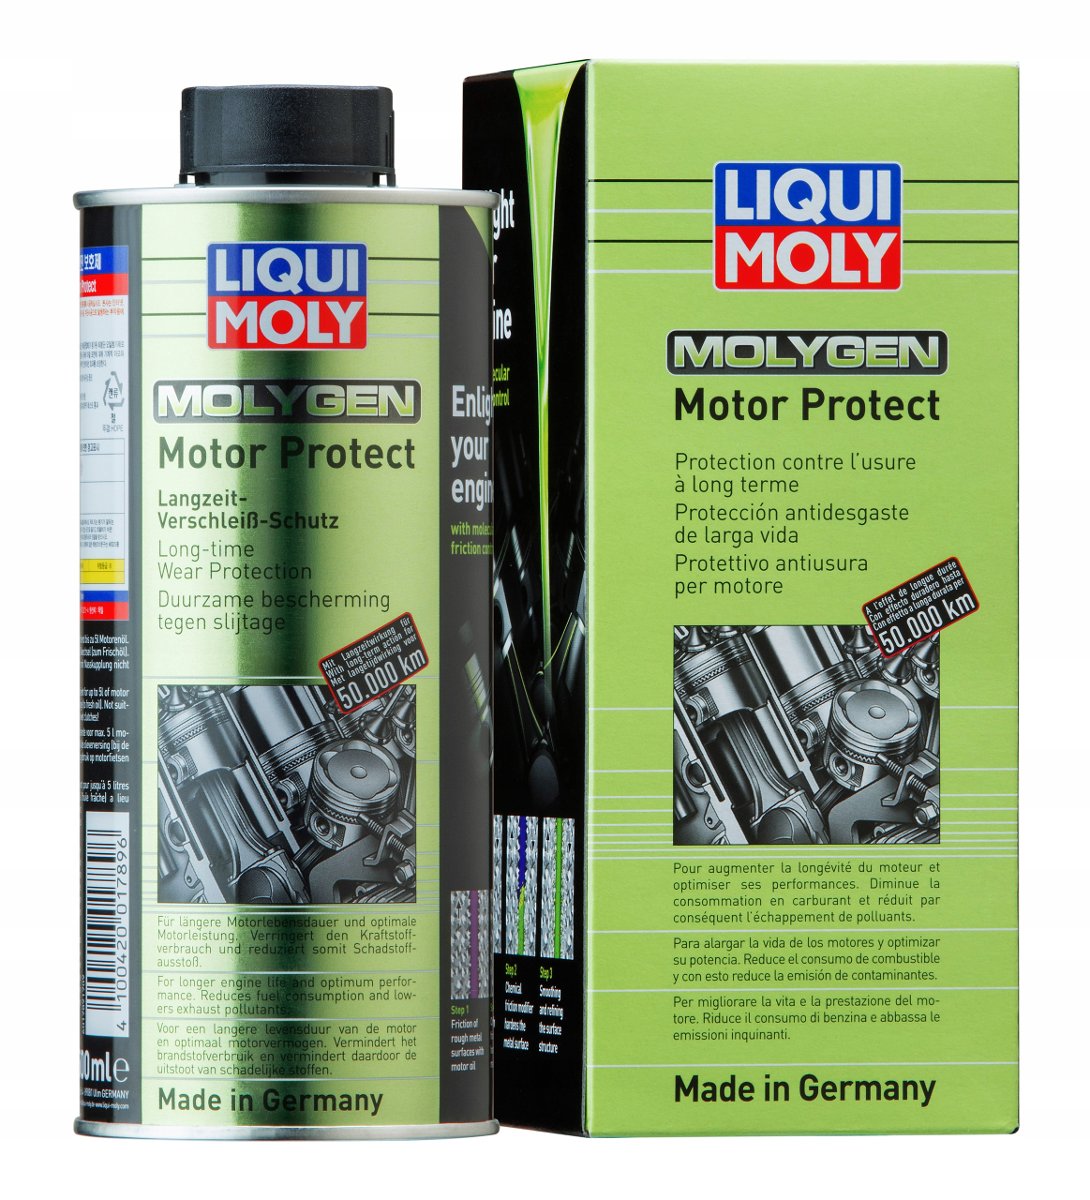 LIQUI MOLY MOLYGEN MOTOR PROTECT 500ml 1015 1015